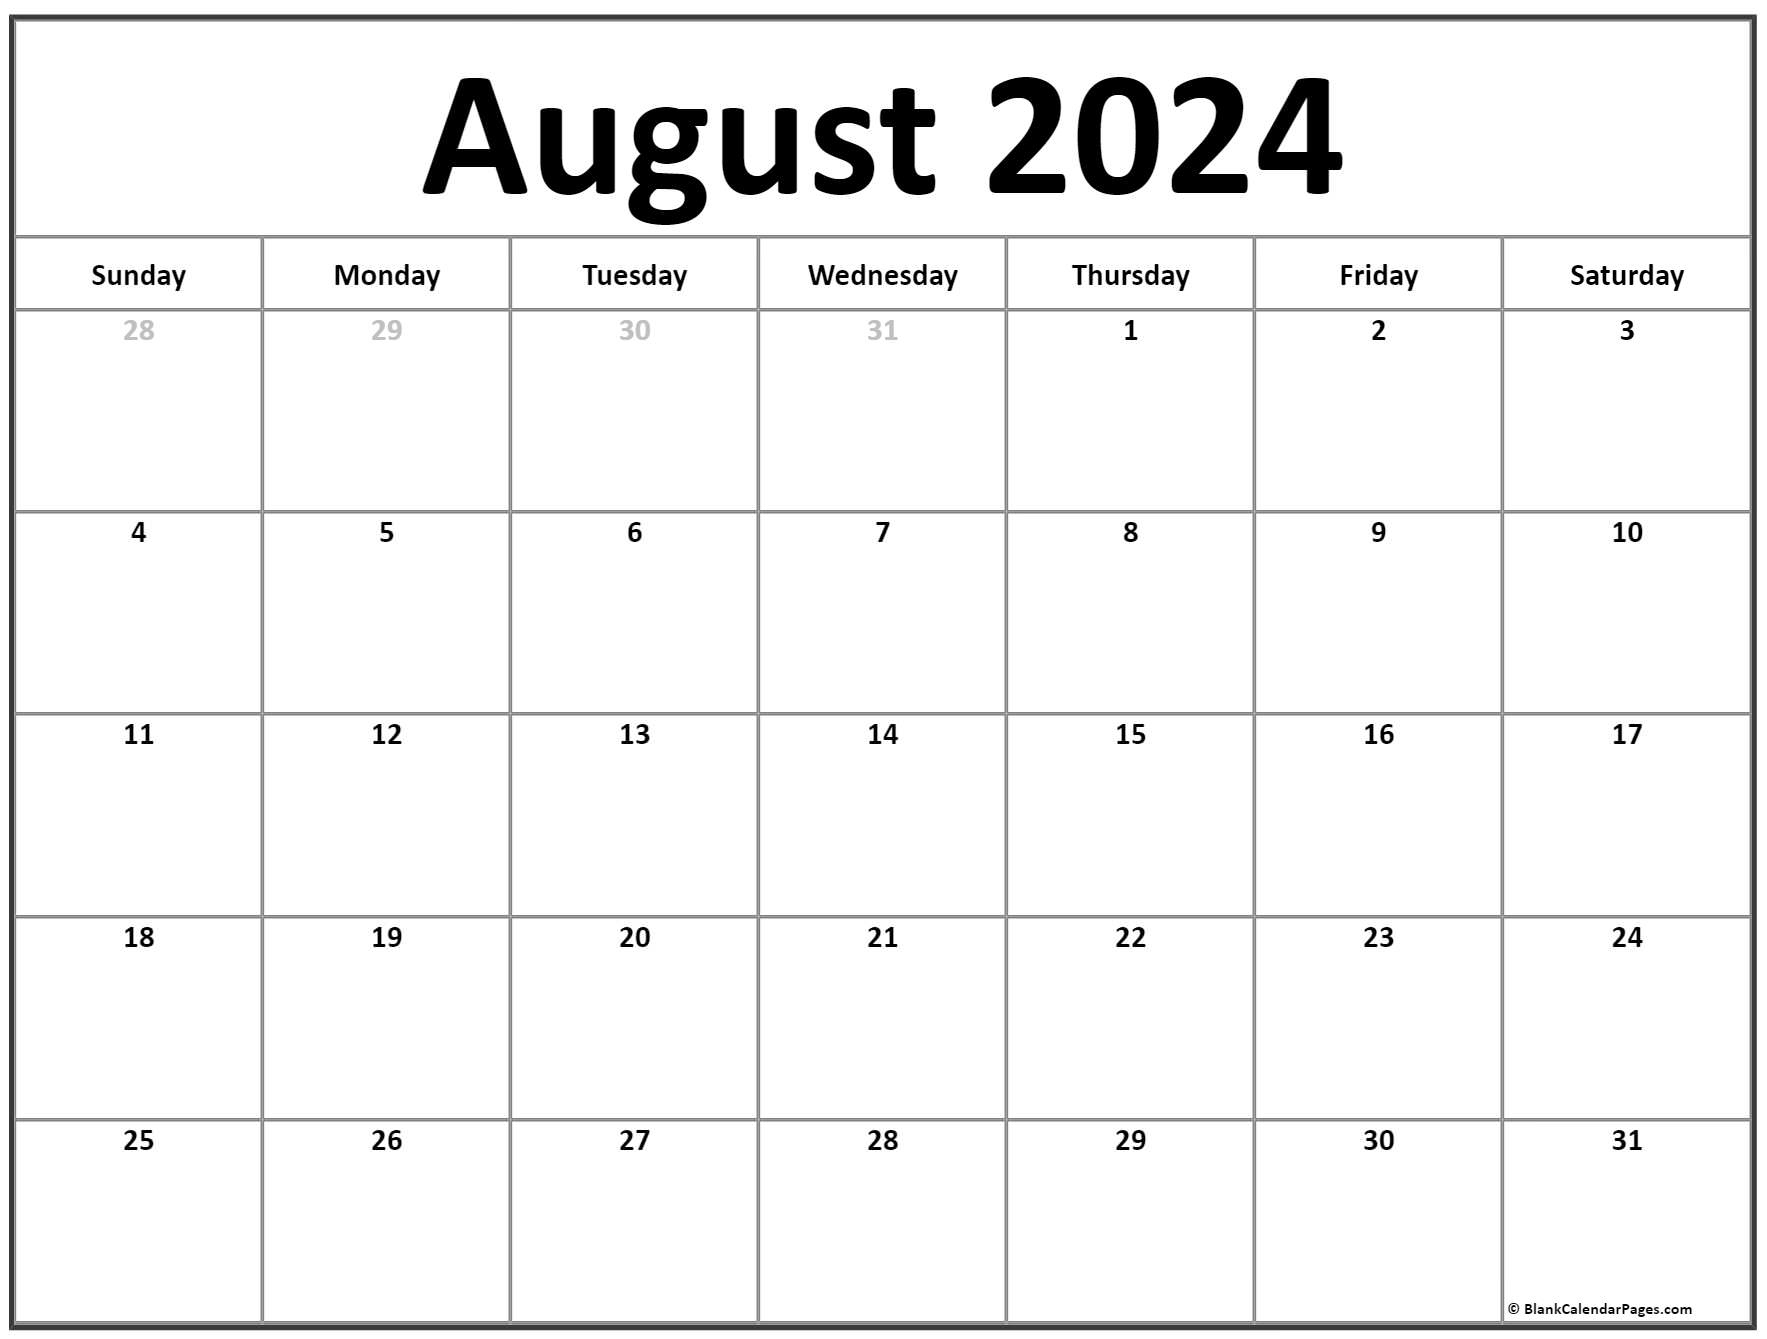 August 2024 Calendar | Free Printable Calendar regarding Free Printable Calendar 2024 August